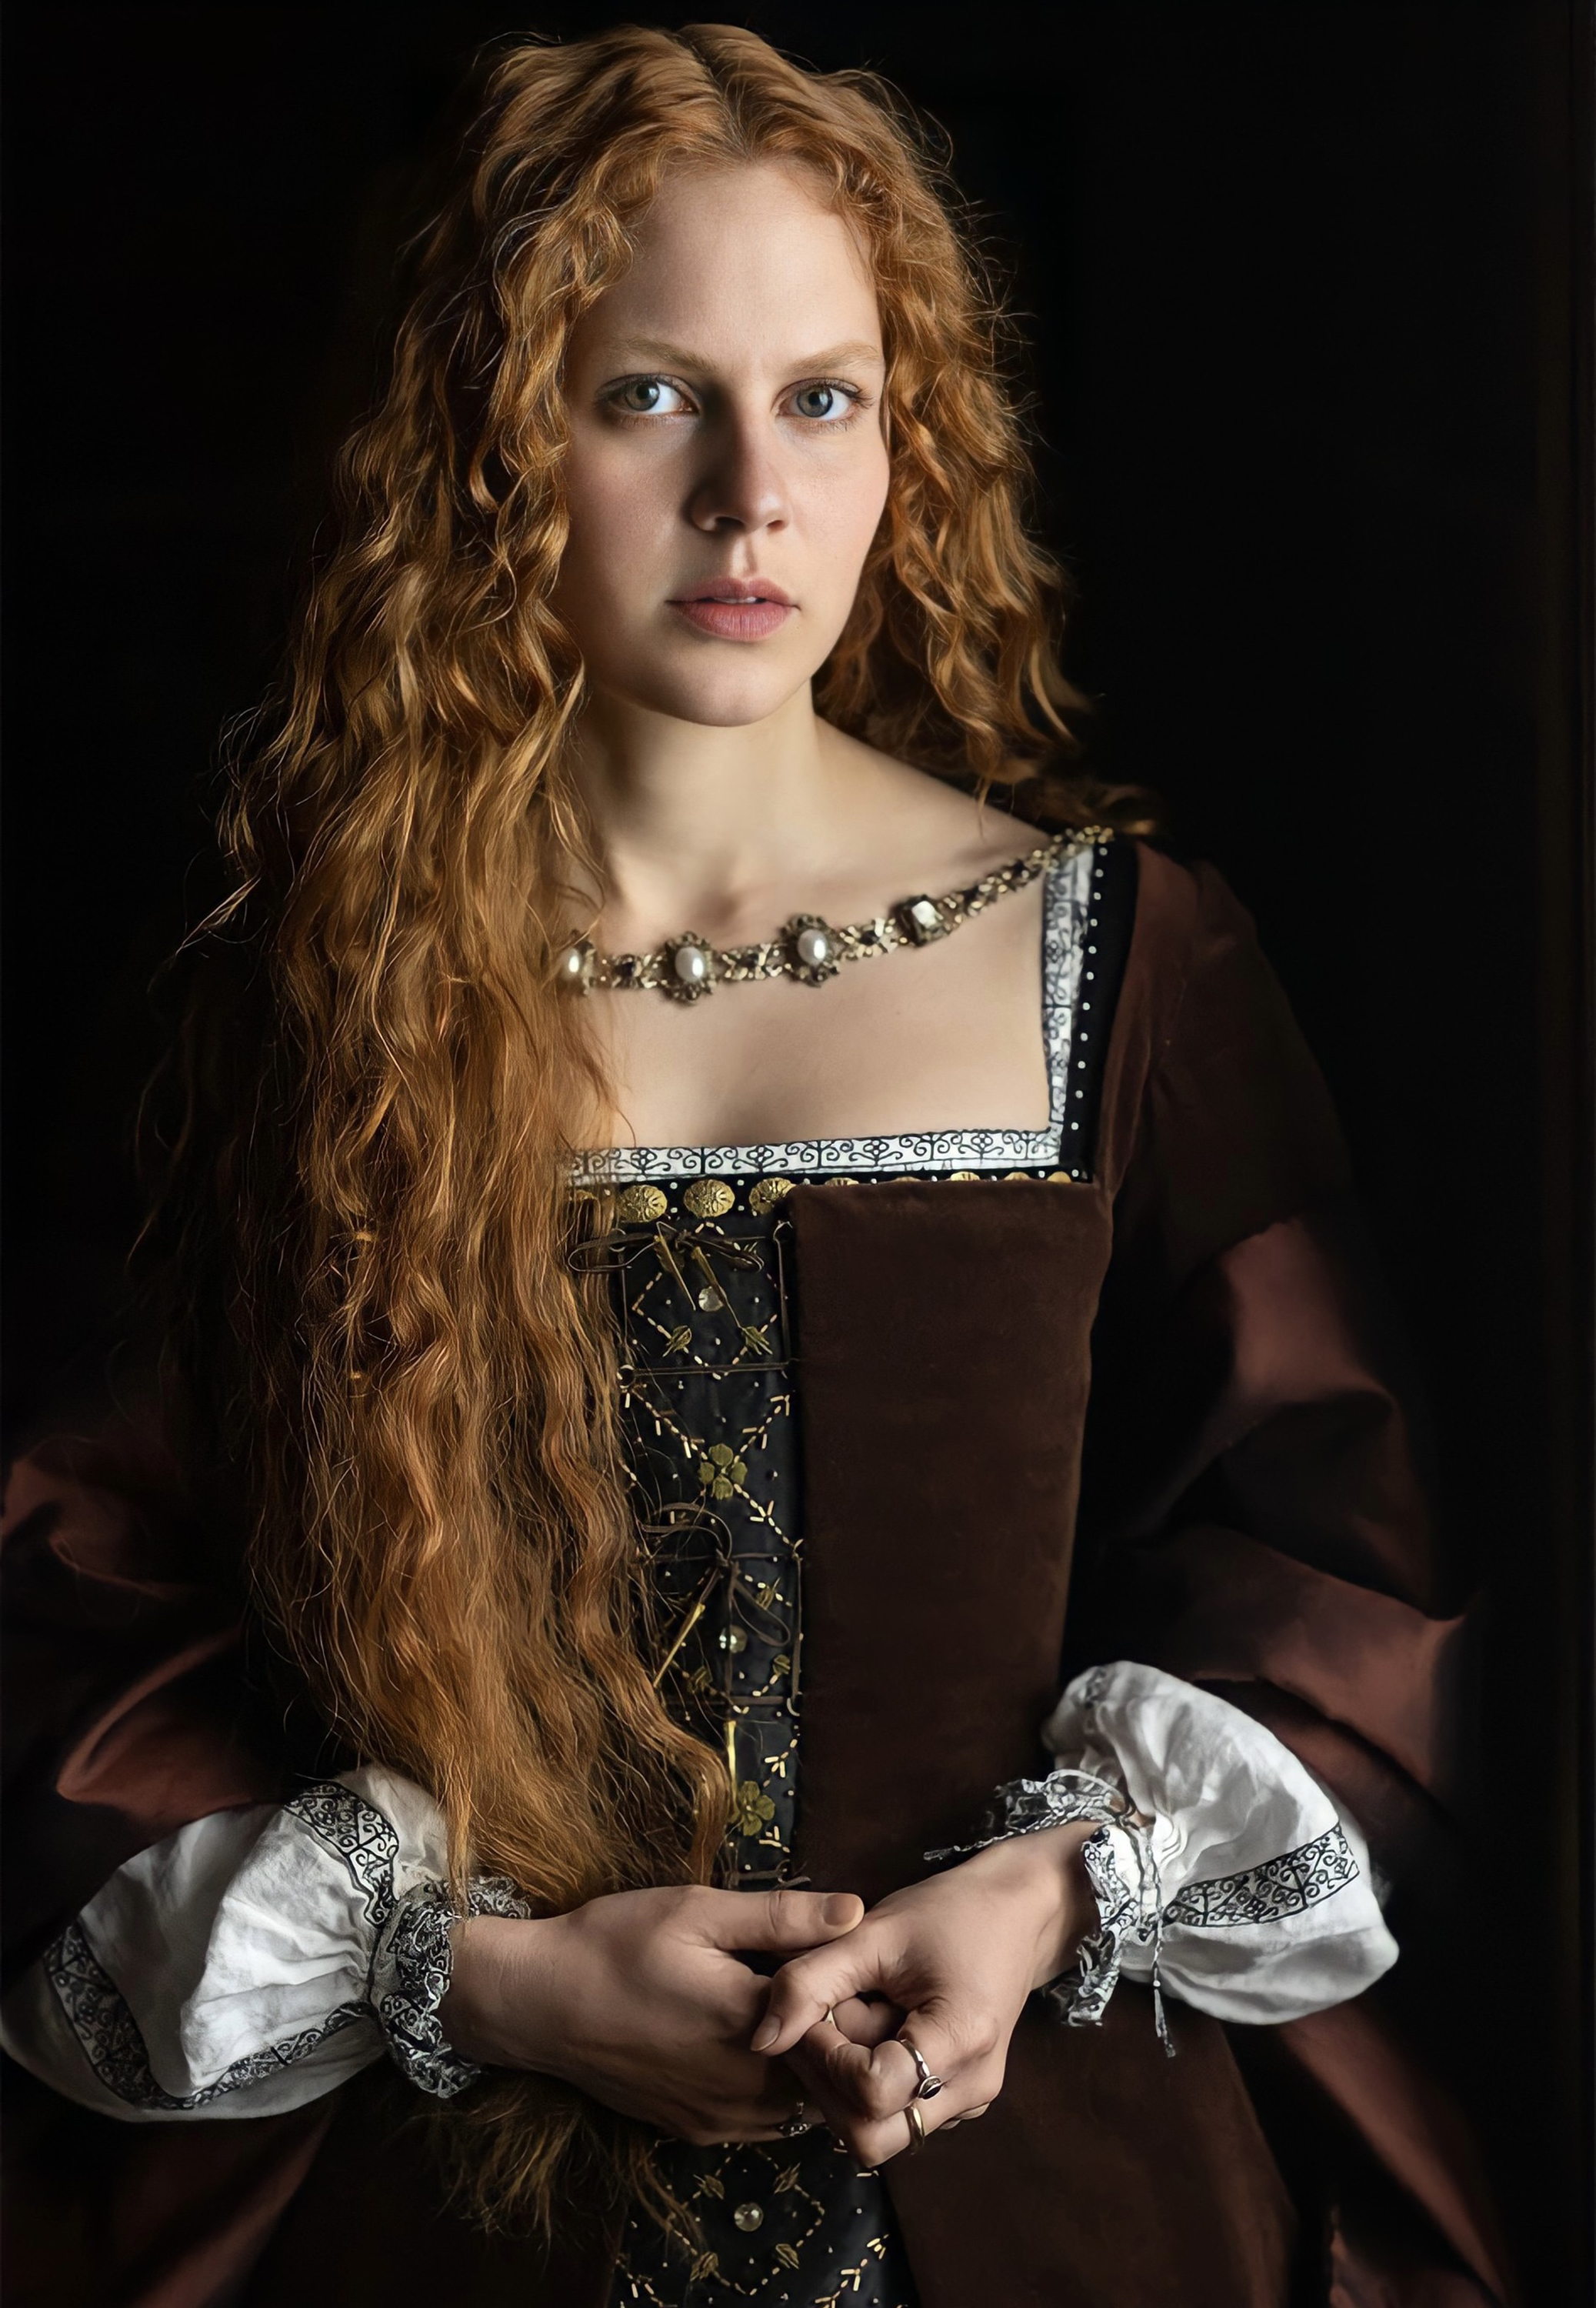 Alicia von Rittberg in “Becoming Elizabeth”